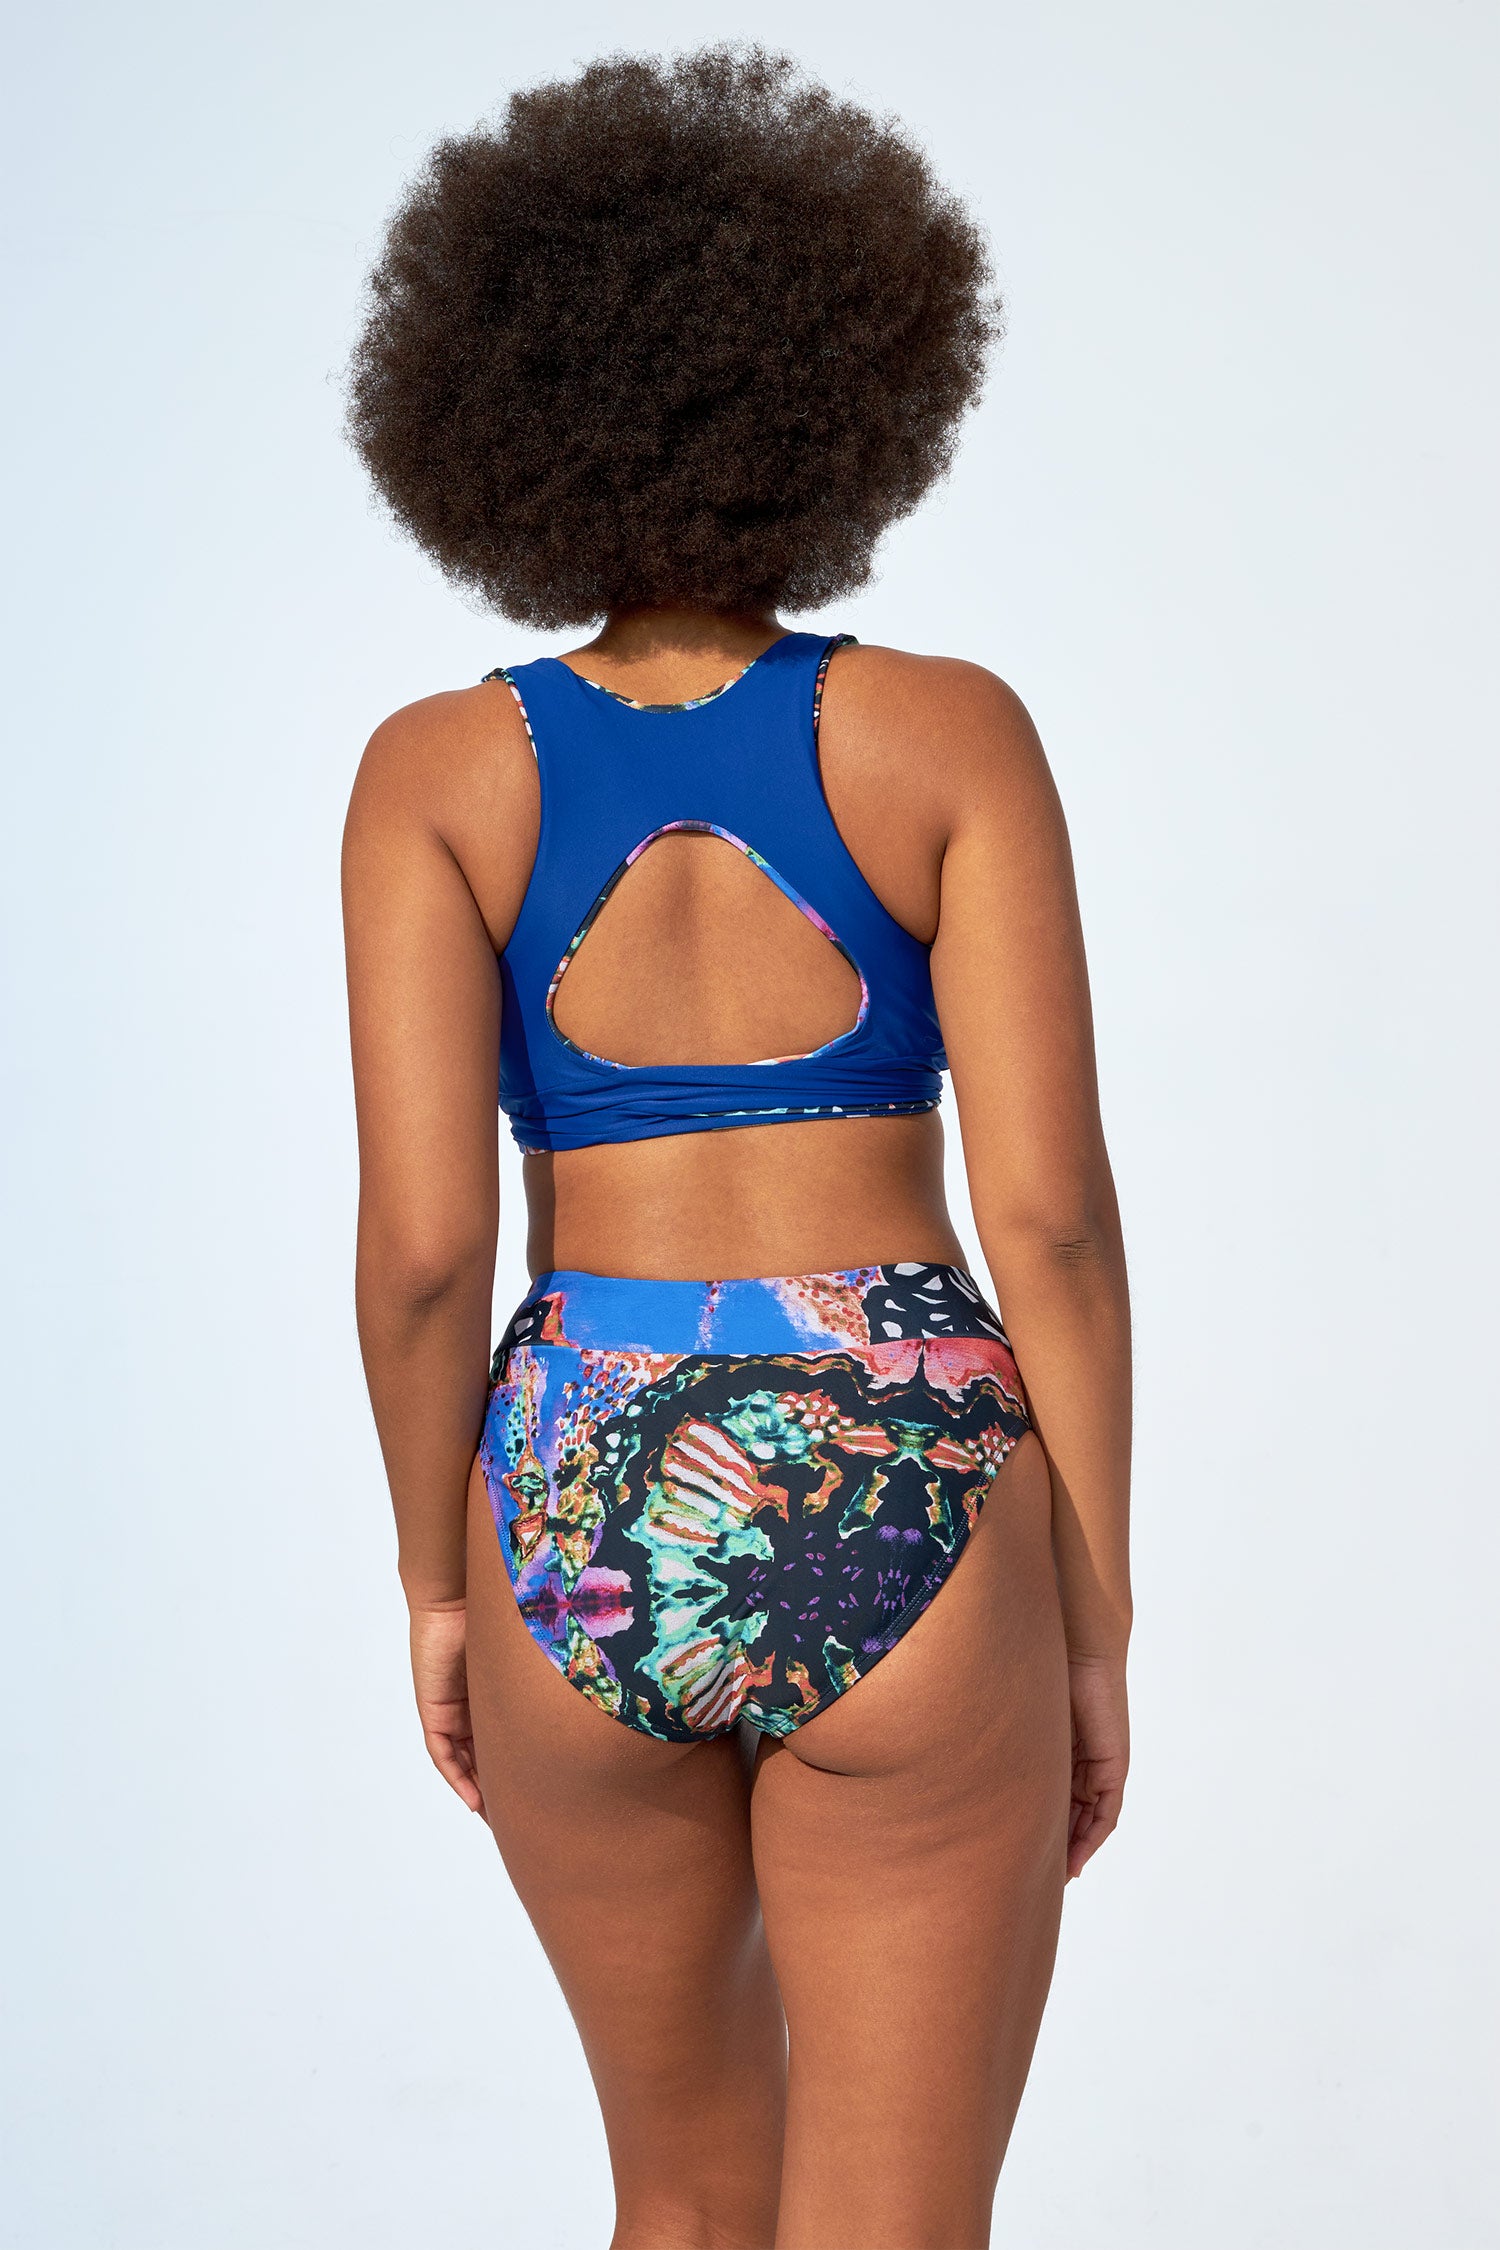 ROXY REVERSIBLE – Bikini top in Navy blue and Oscar print – Selfish swimwear